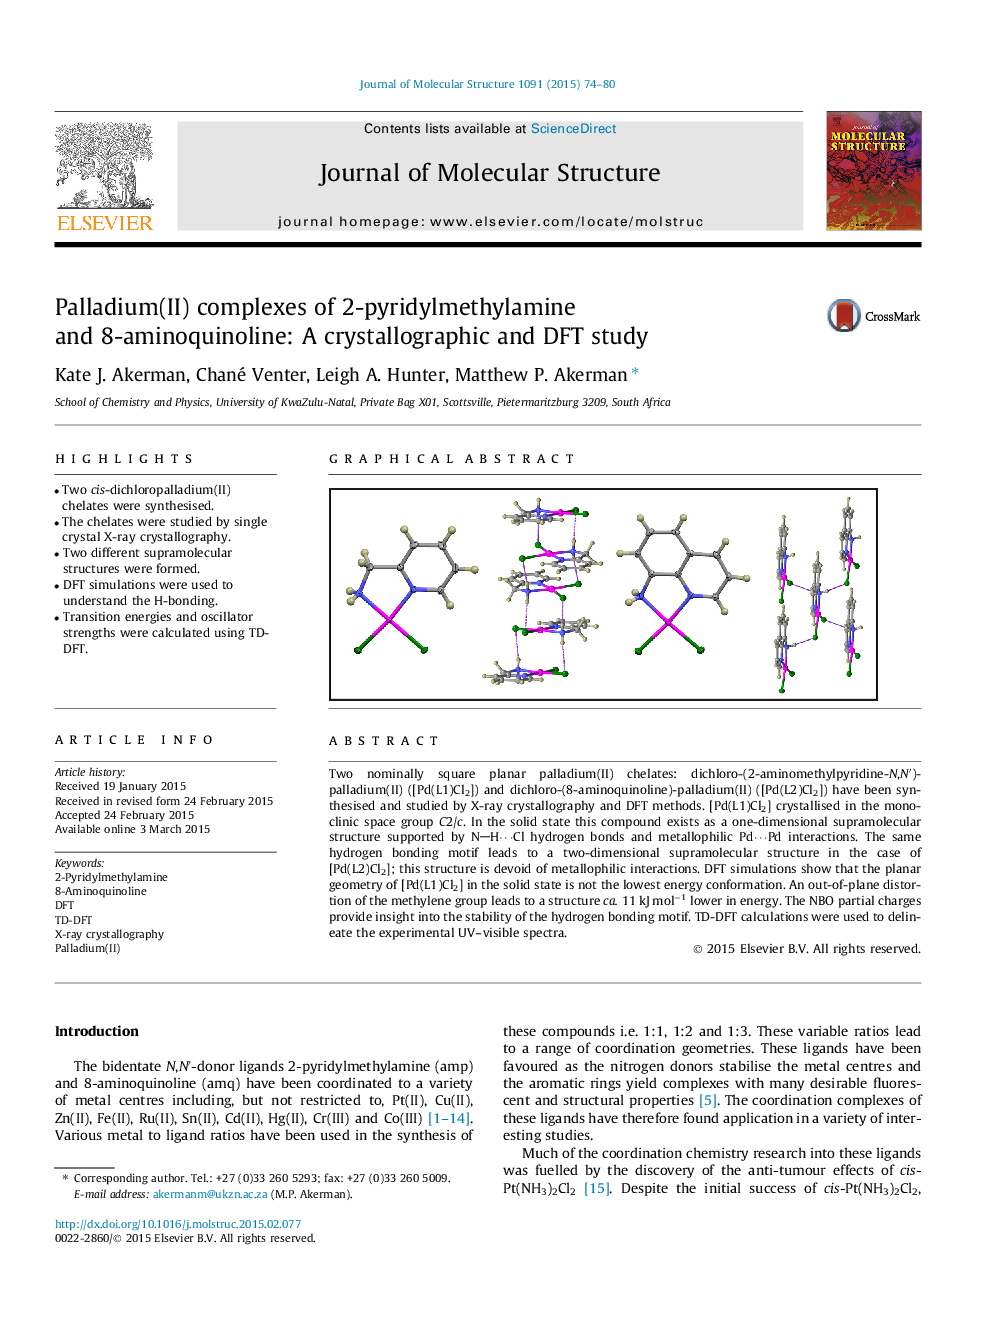 Palladium(II) complexes of 2-pyridylmethylamine and 8-aminoquinoline: A crystallographic and DFT study